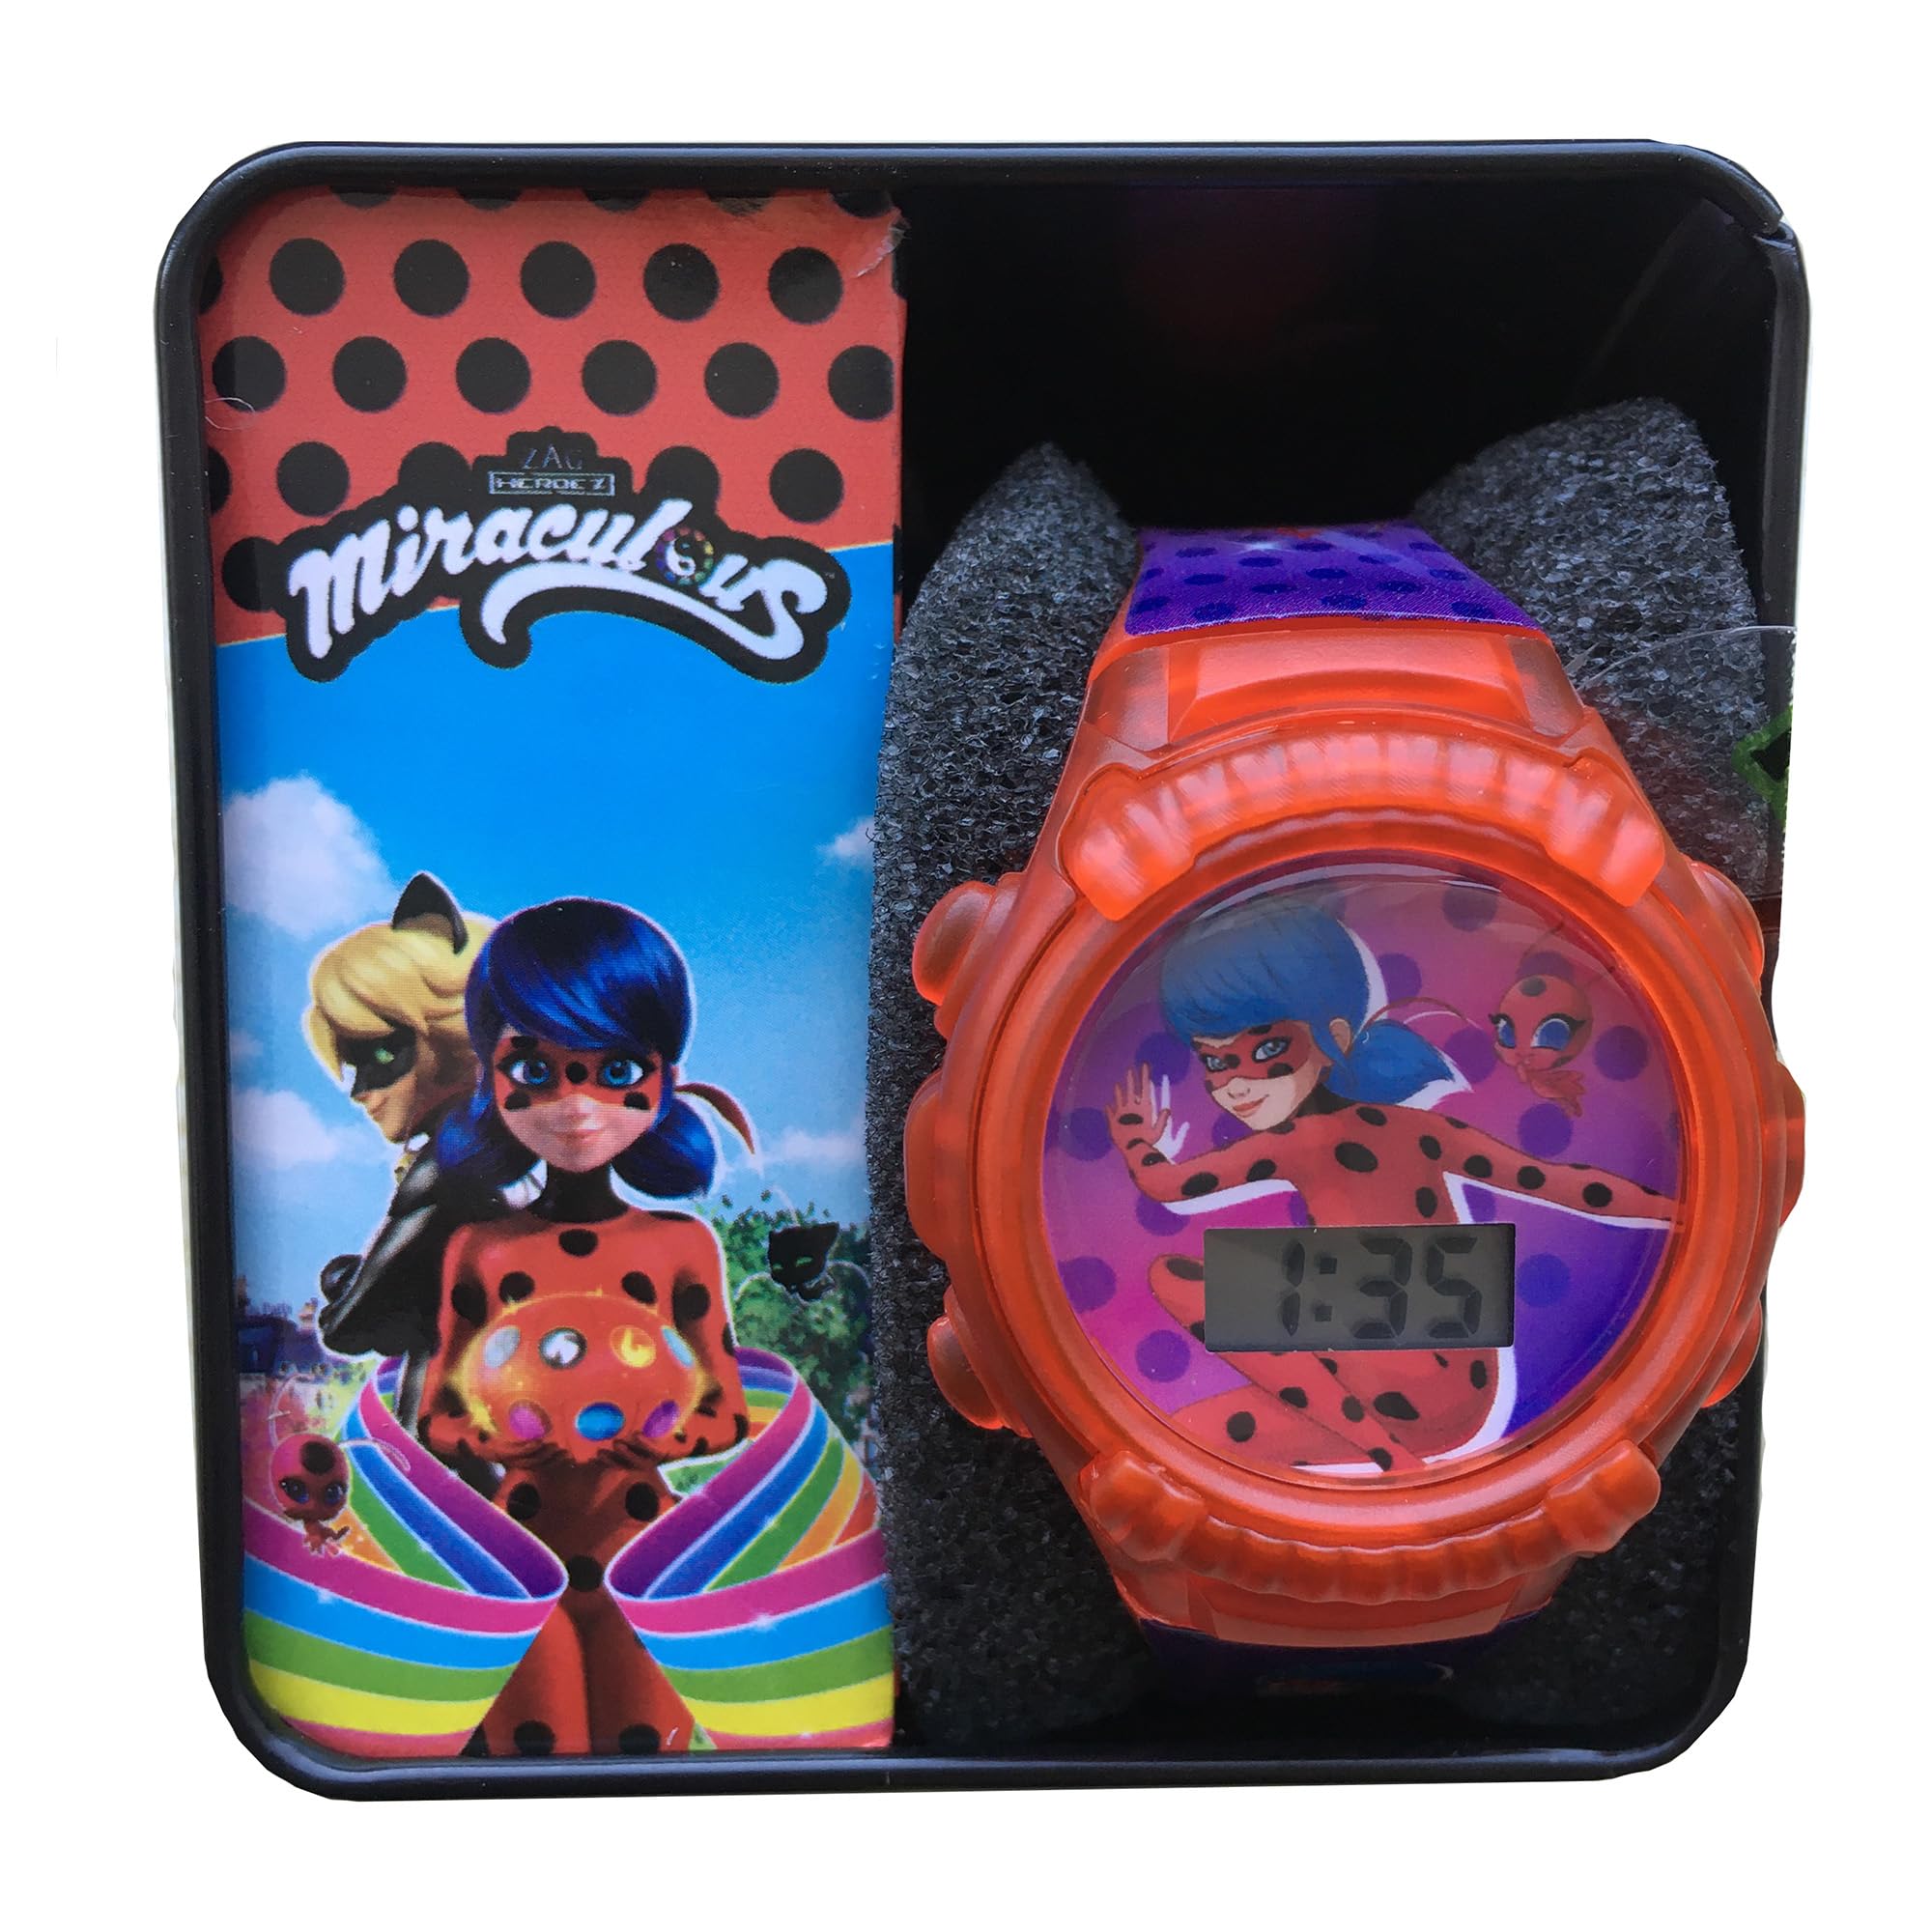 Accutime Kids Miraculous Ladybug Digital Flashing LCD Quartz Childrens Wrist Watch for Boys, Girls, Toddlers with Pink Strap (Model: MRC4005AZ)